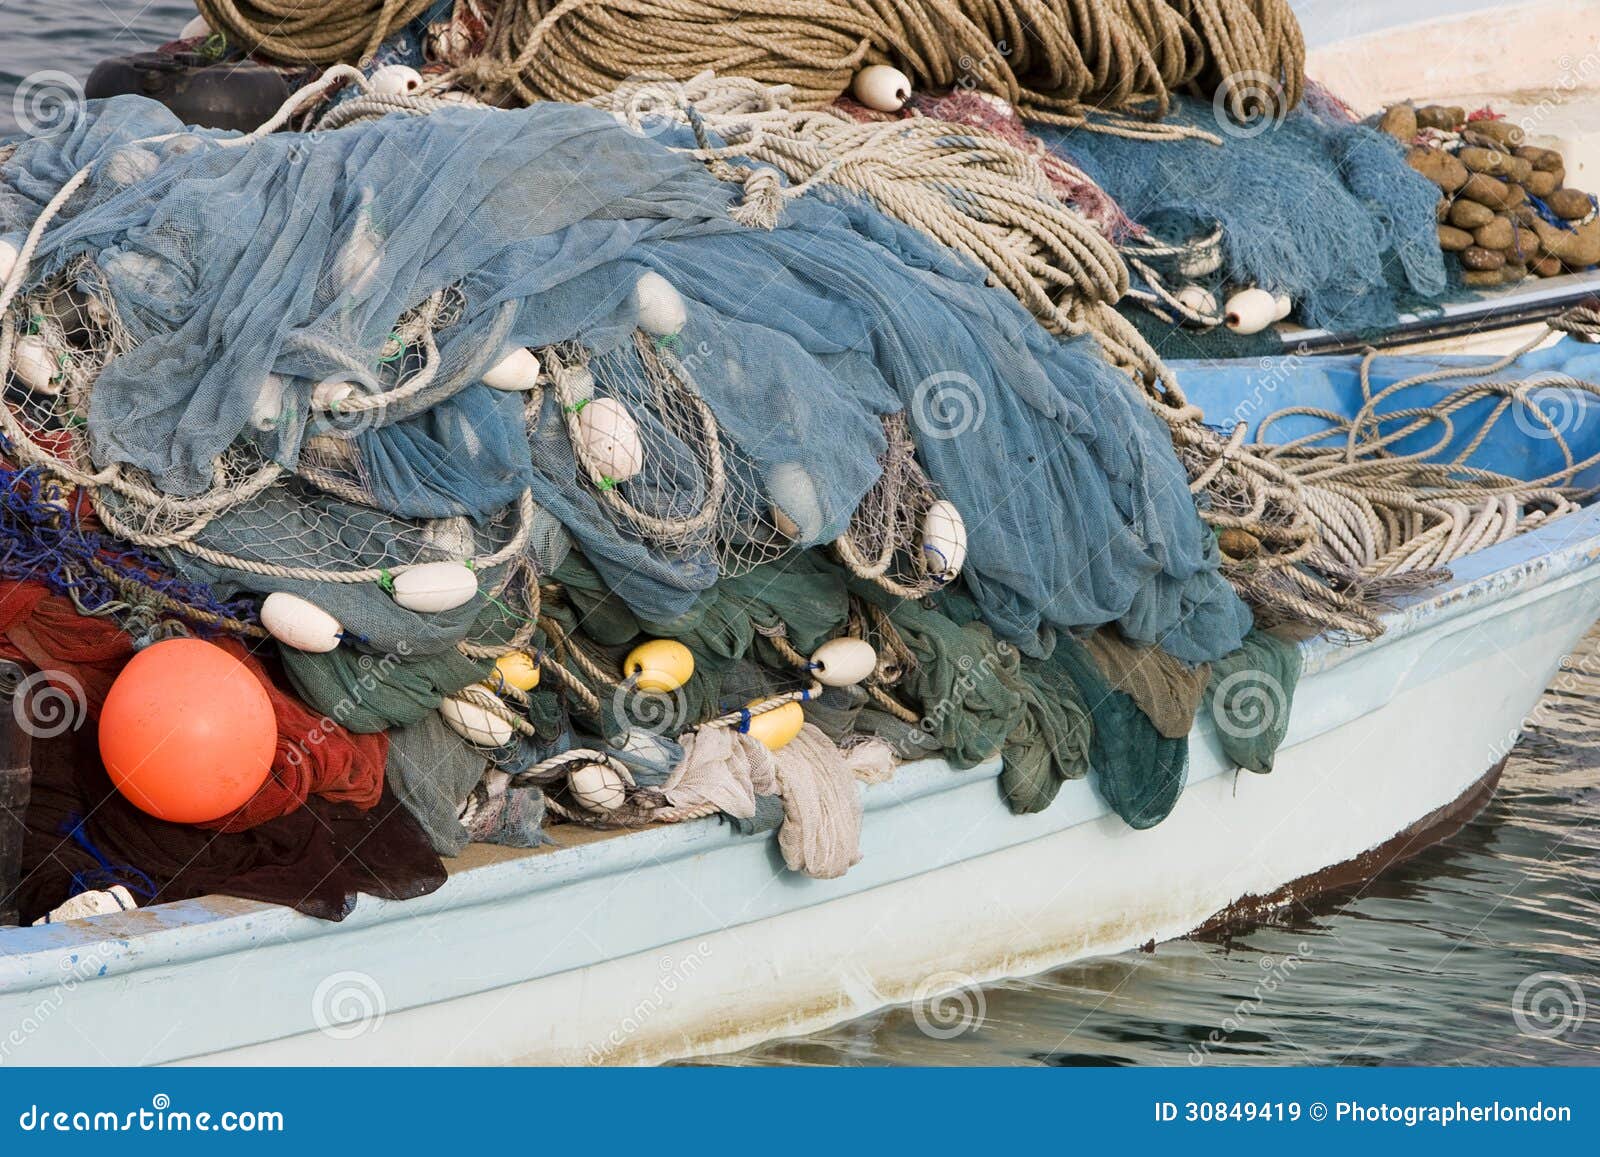 kalba uae fishing nets piled high on boat in kalbar fujairah